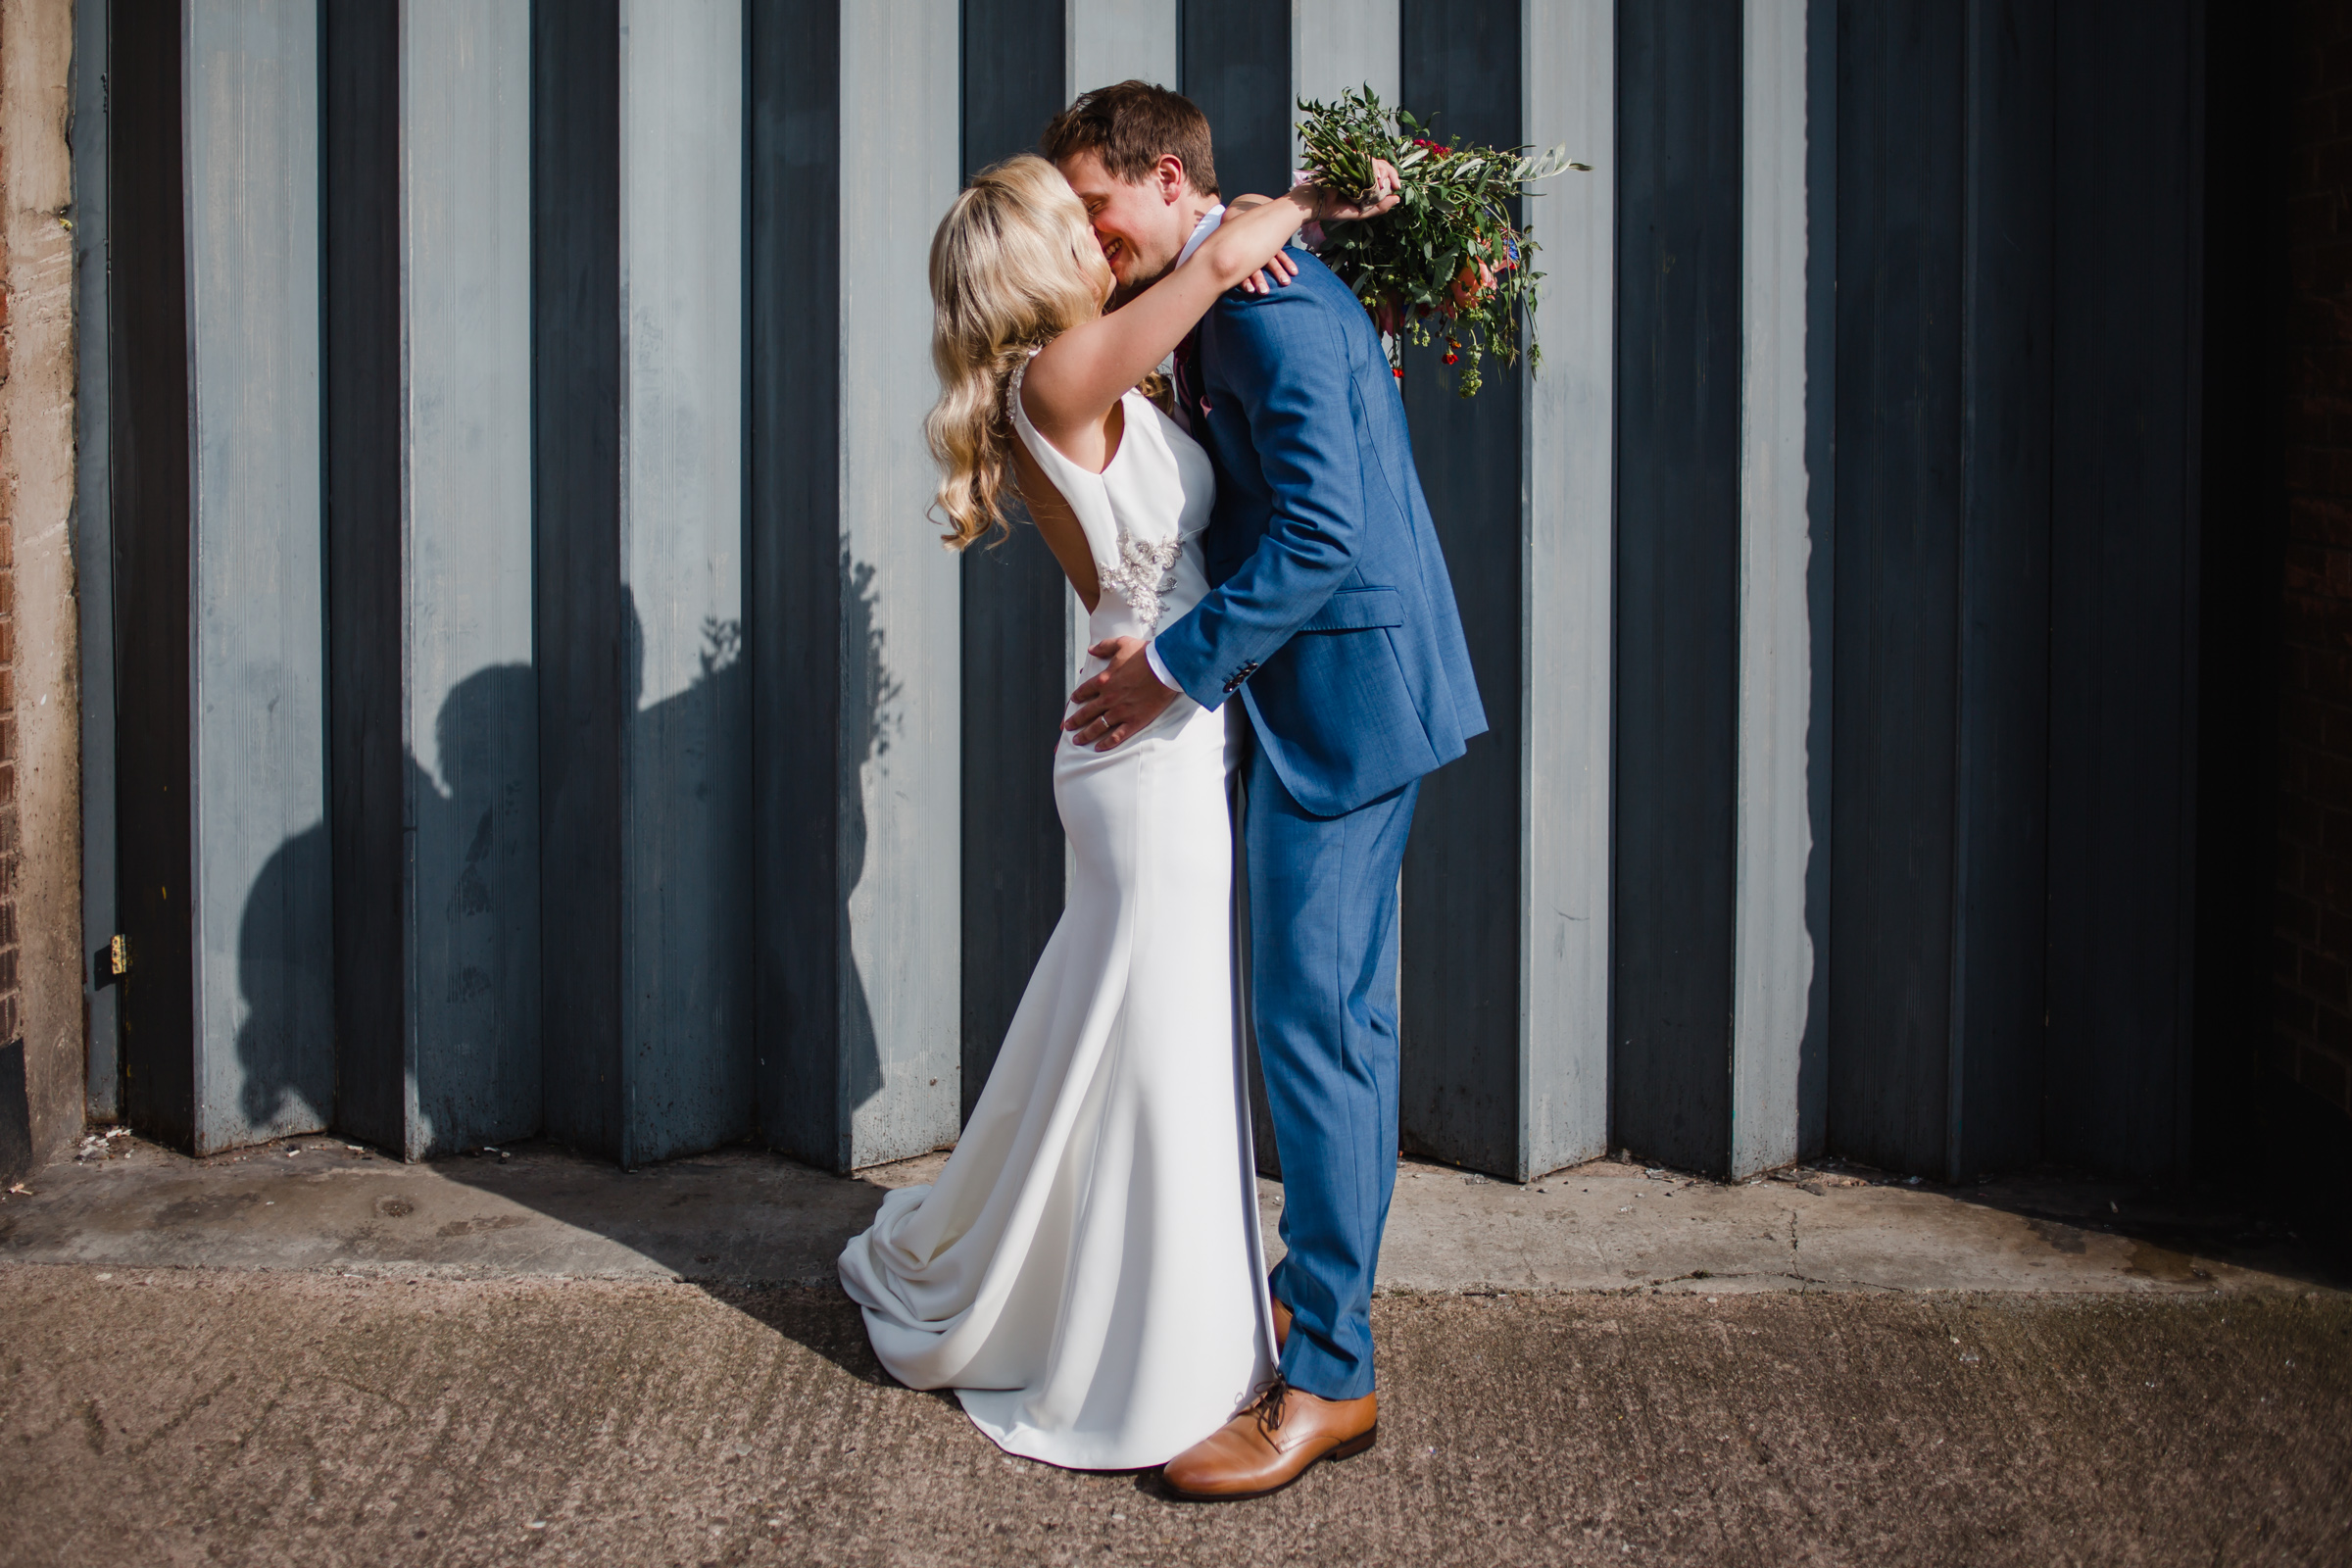 a bride and groom kiss in front of an industrial shutter door in digbeth Birmingham